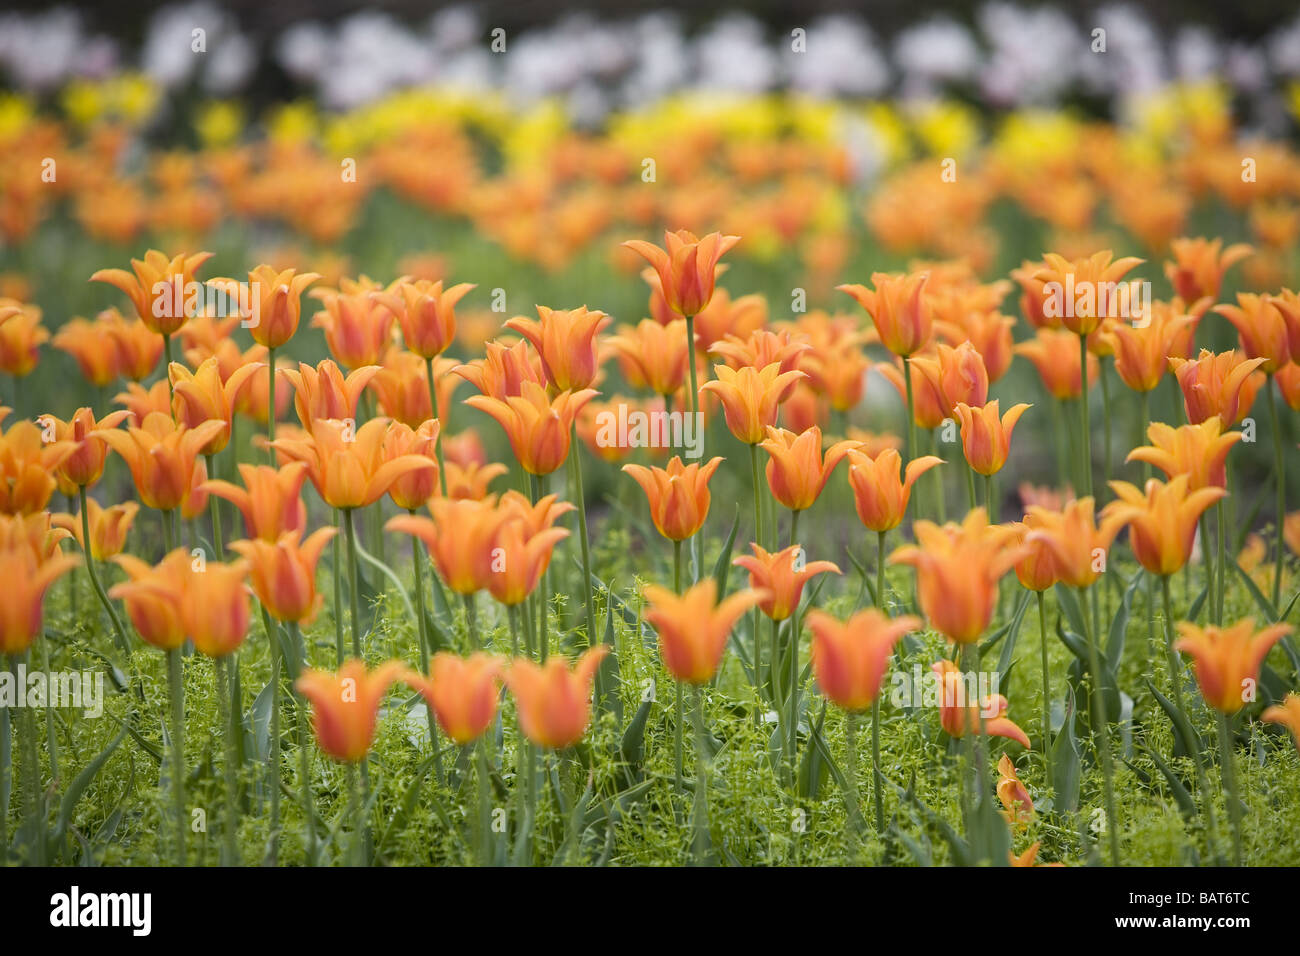 Mass planting of tulips Stock Photo